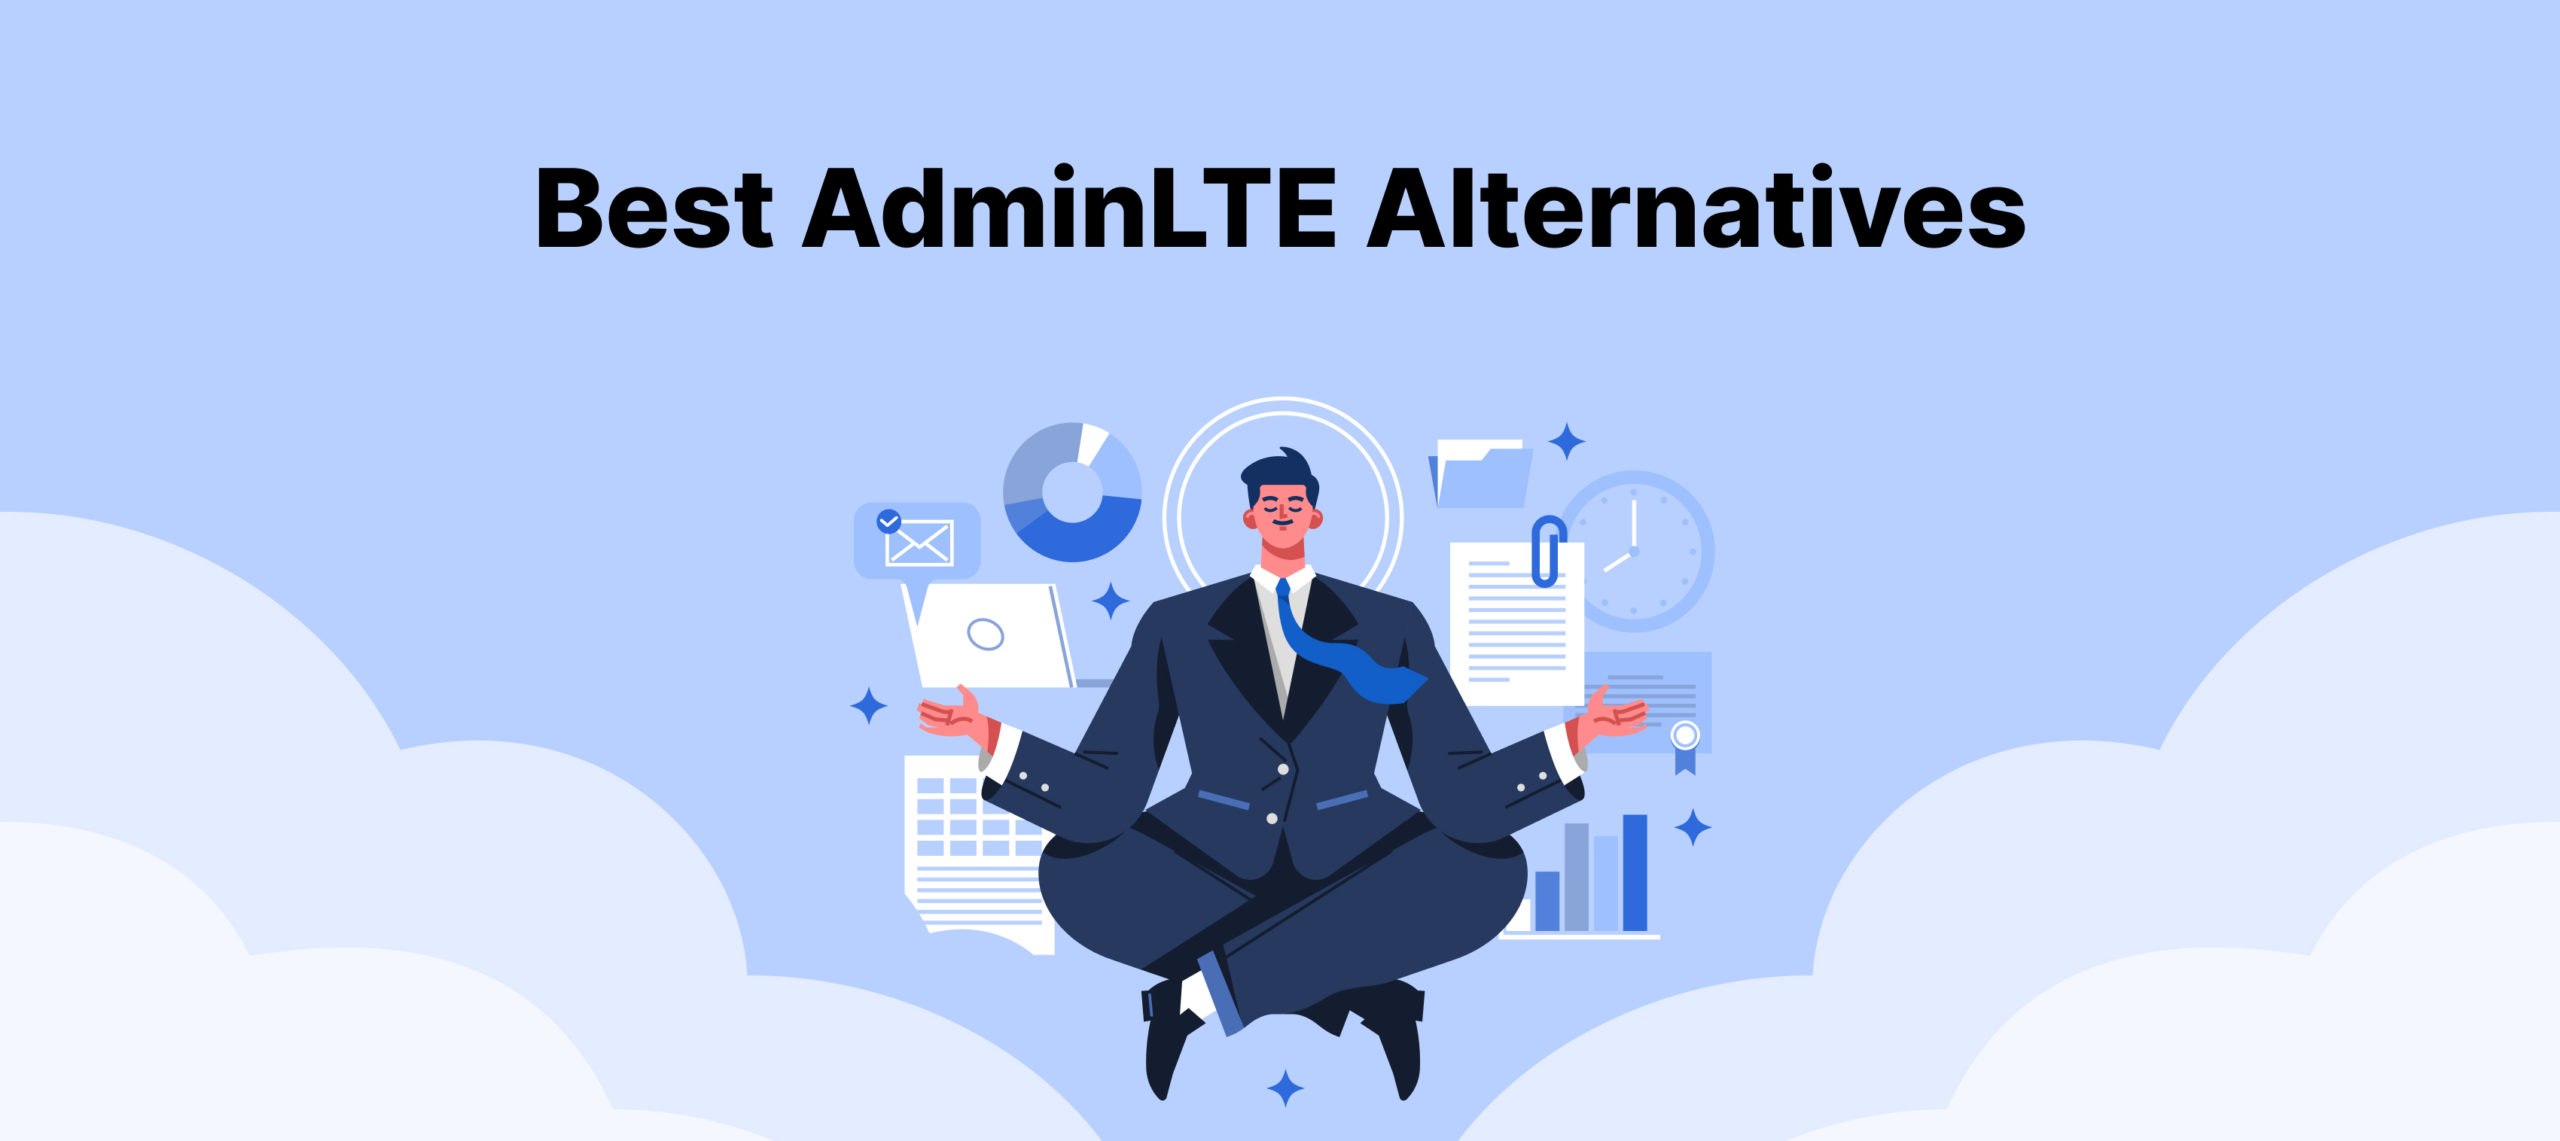  Top 10 AdminLTE Alternatives